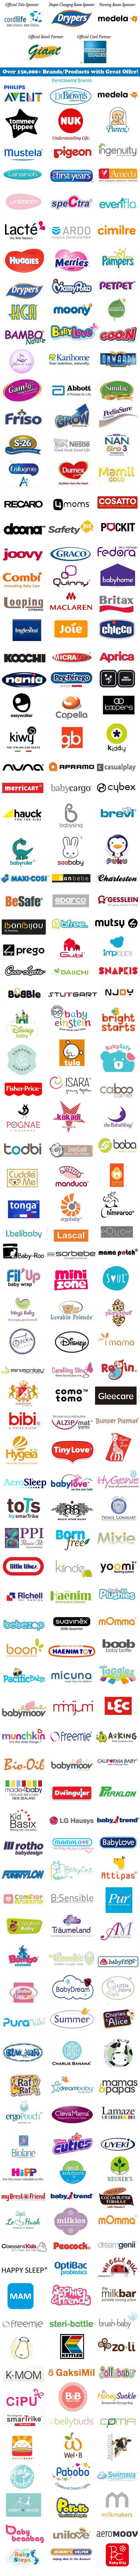 baby fair brands